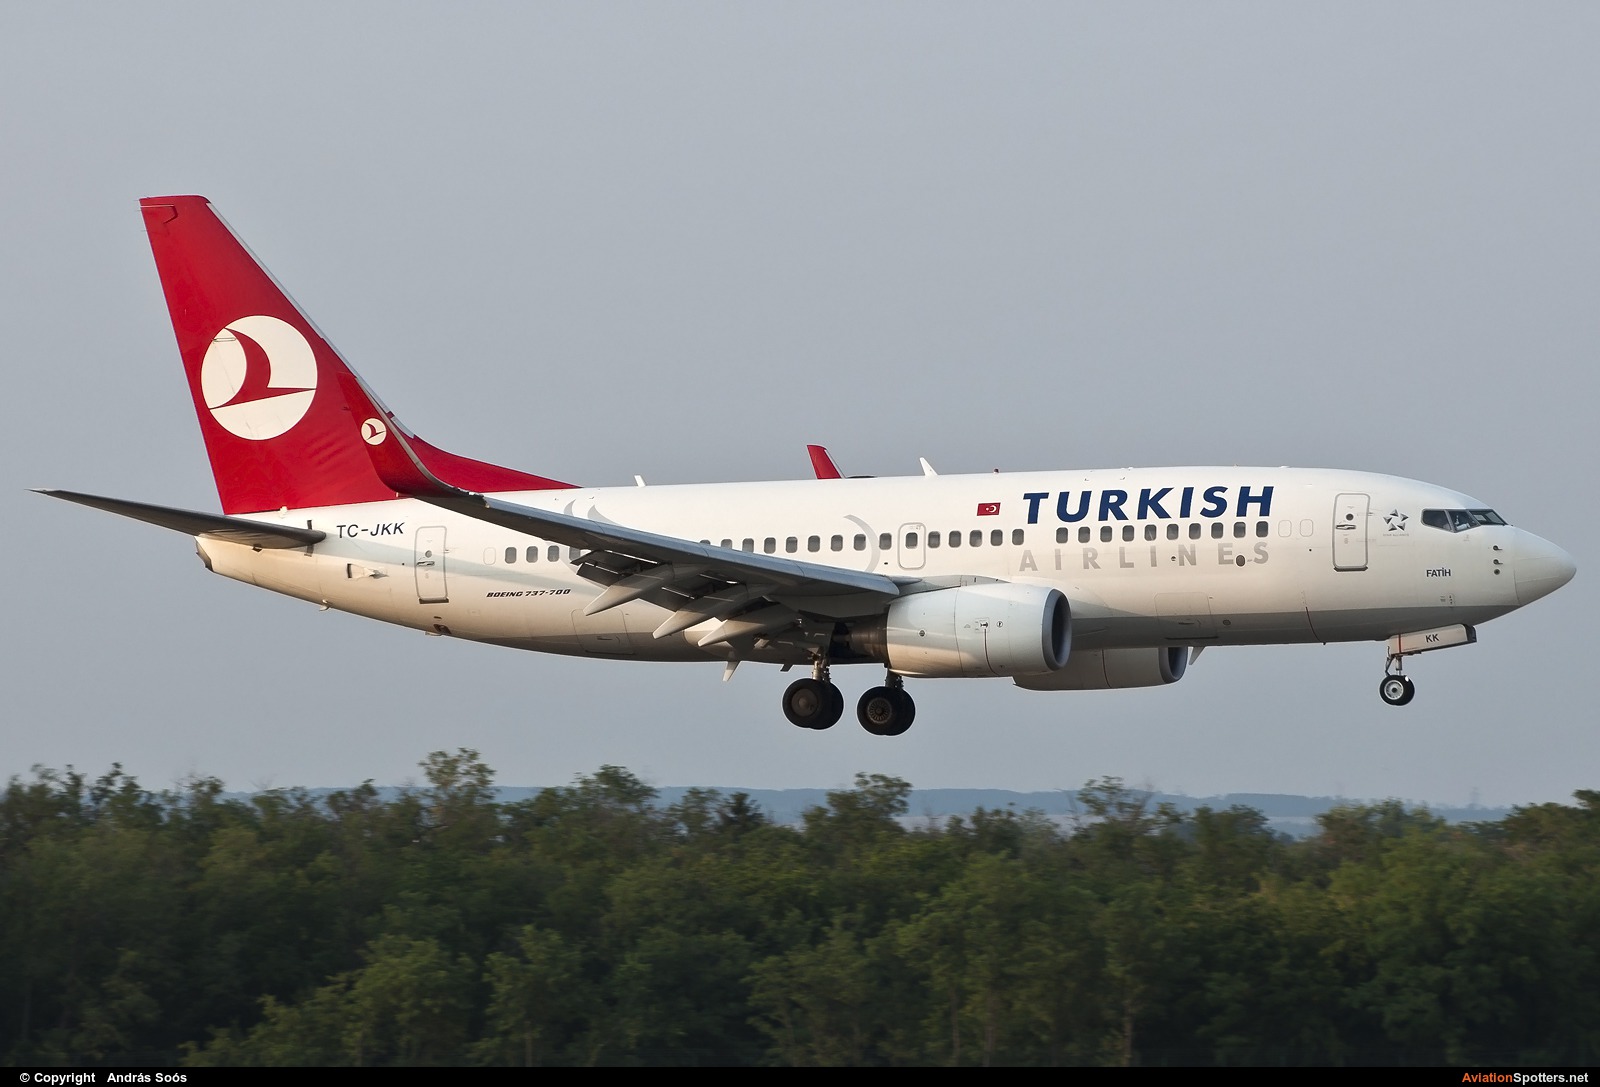 Turkish Airlines  -  737-700  (TC-JKK) By András Soós (sas1965)